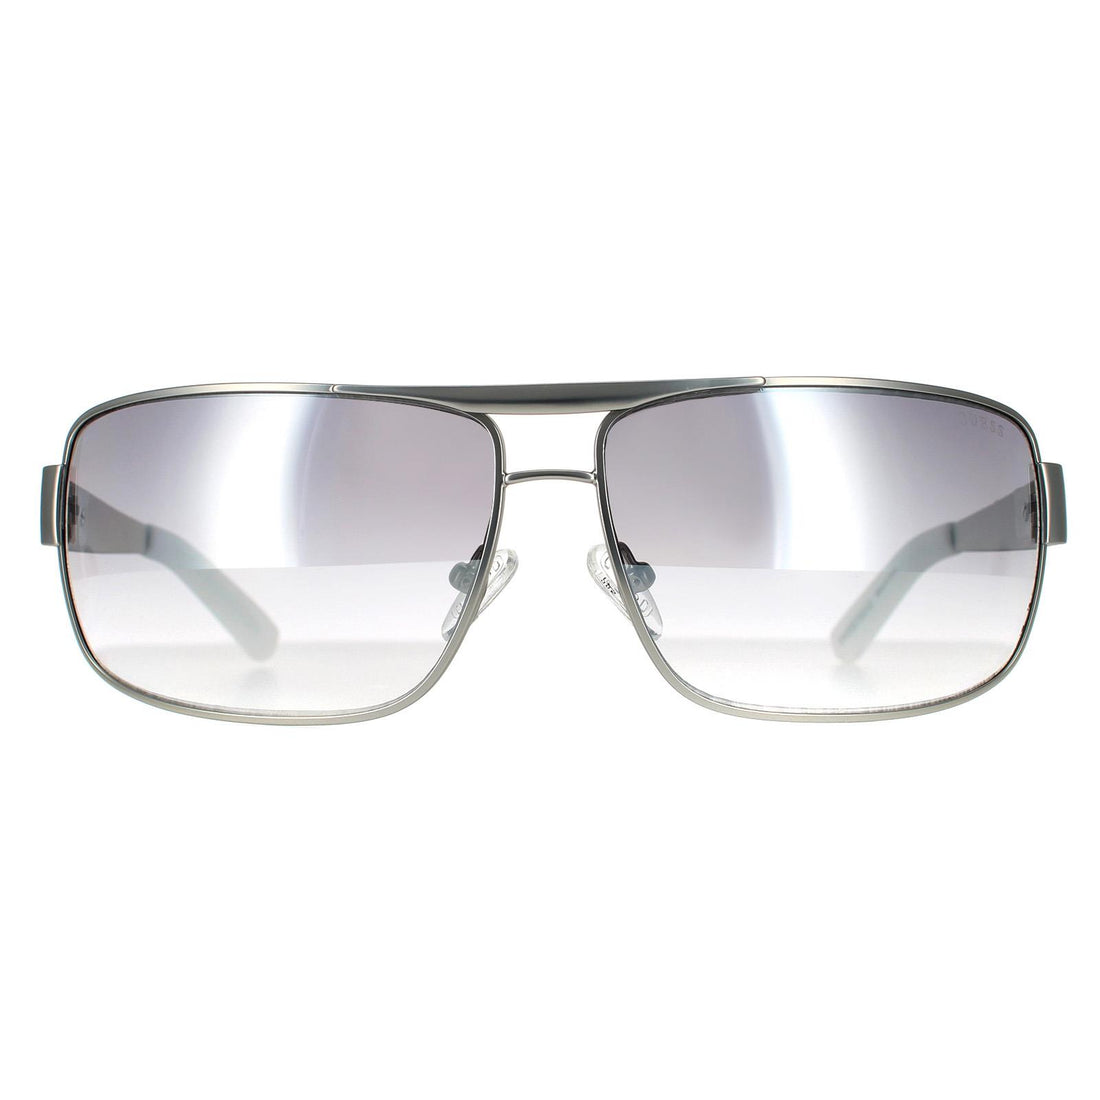 Guess GU6954 Sunglasses Matte Light Nickeltin Smoke Mirror